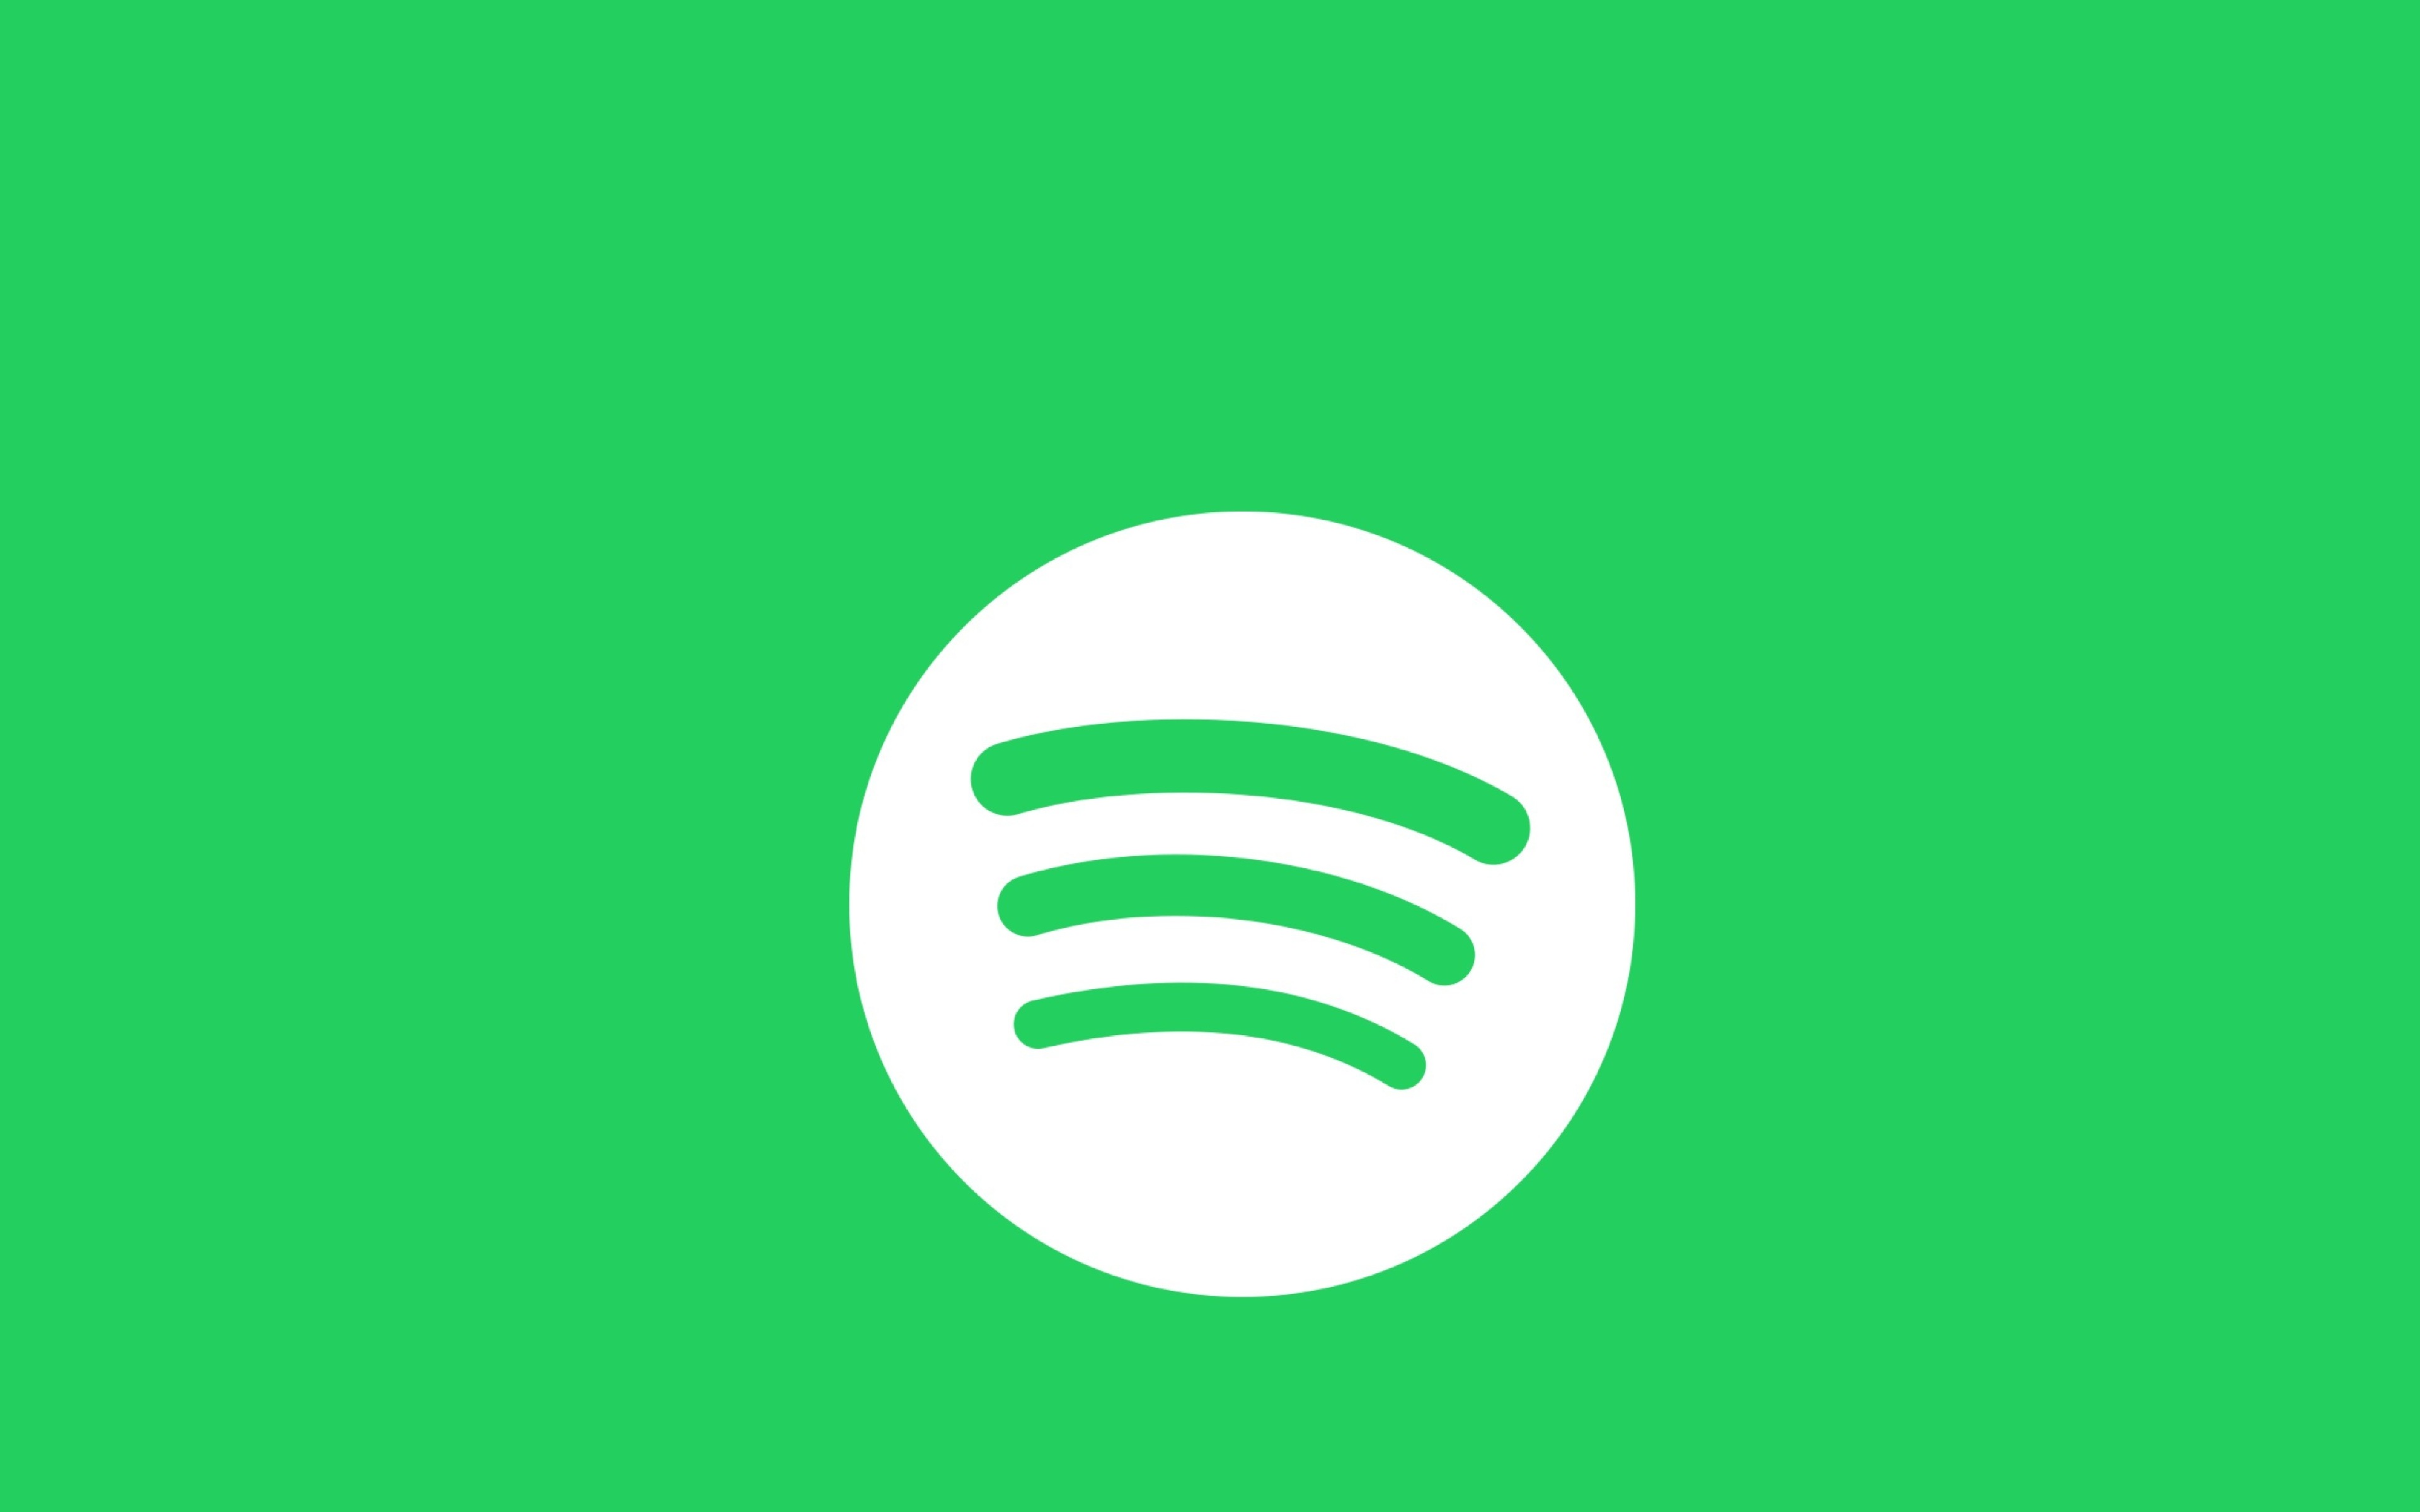 Spotify marketing logo download free